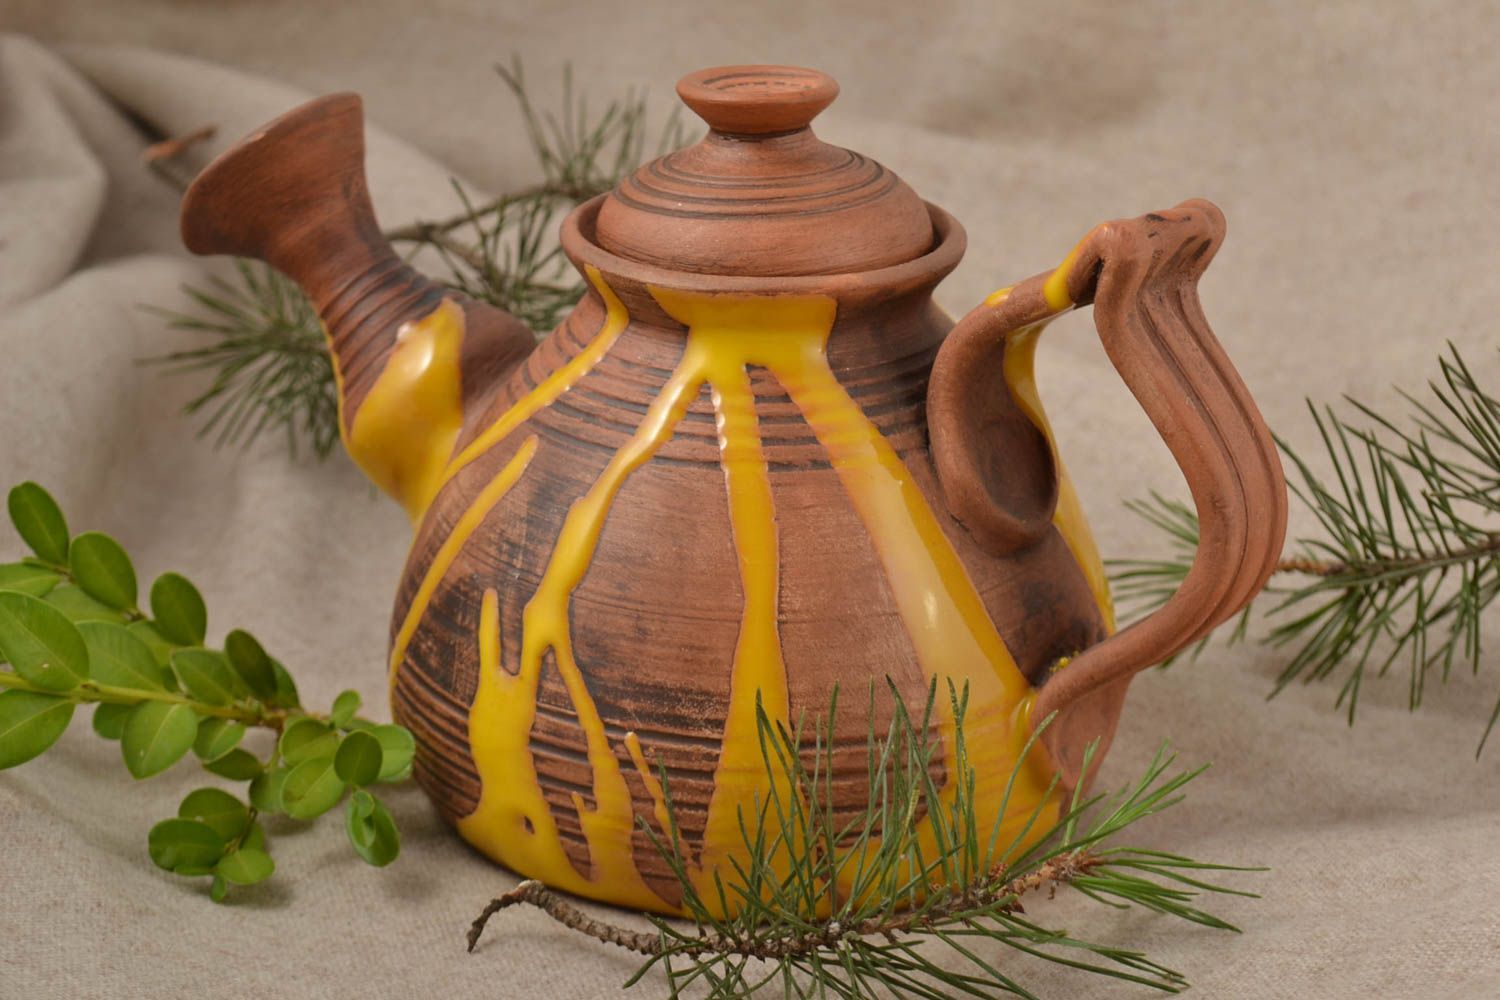 Unusual handmade ceramic teapot design kitchen supplies table setting ideas photo 1